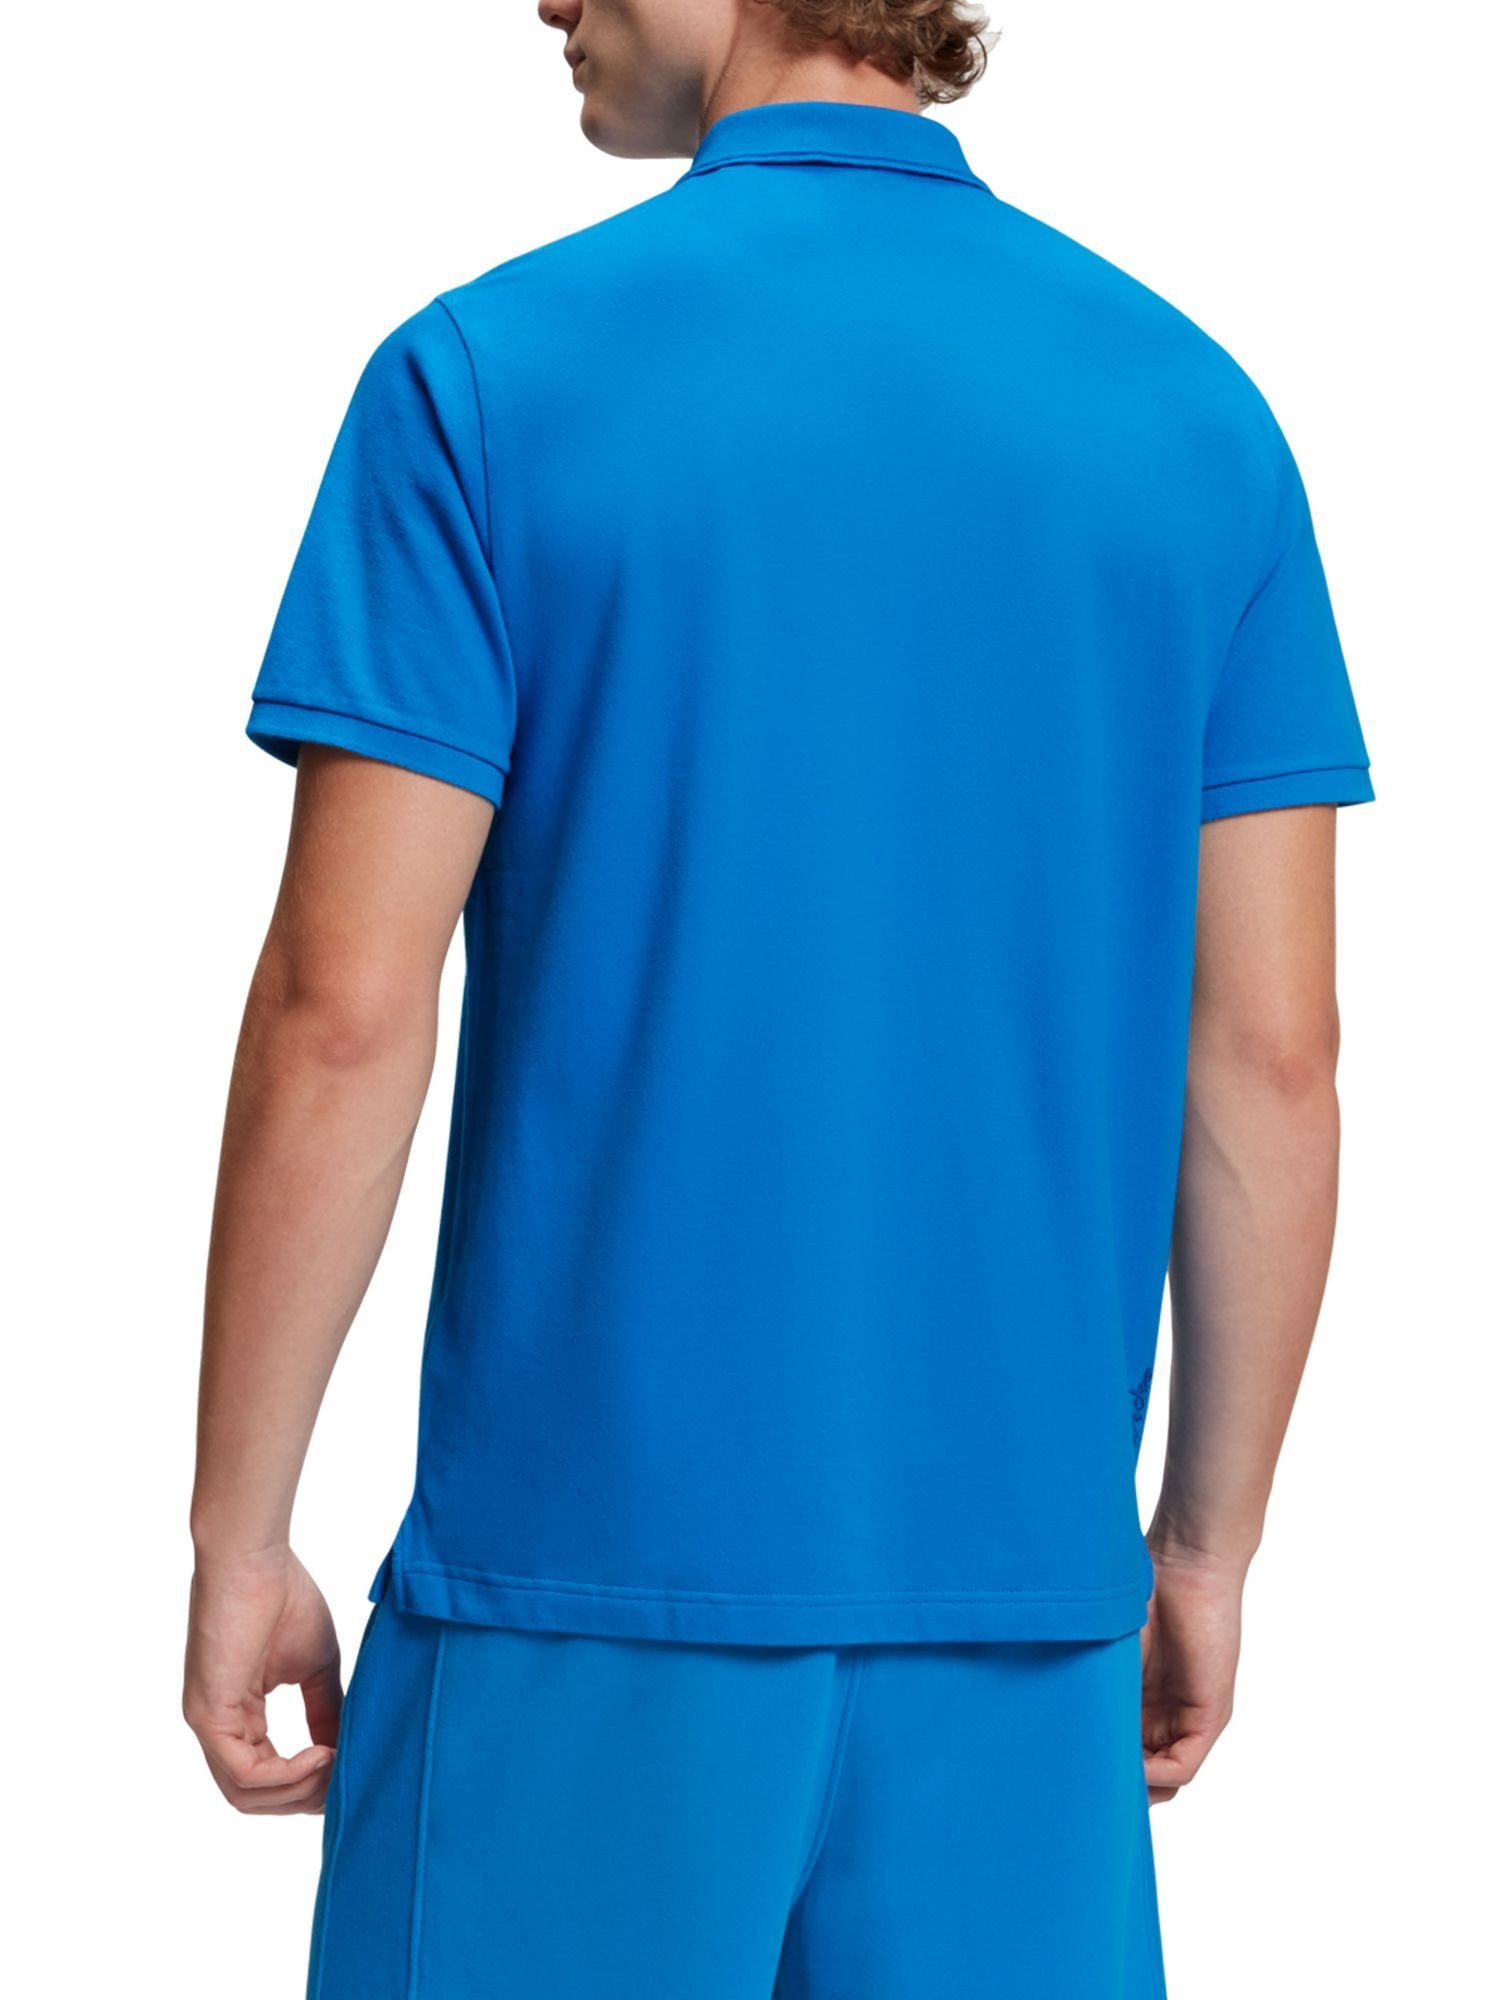 Dolphin-Batch Klassisches Esprit Tennis-Poloshirt BLUE mit Poloshirt